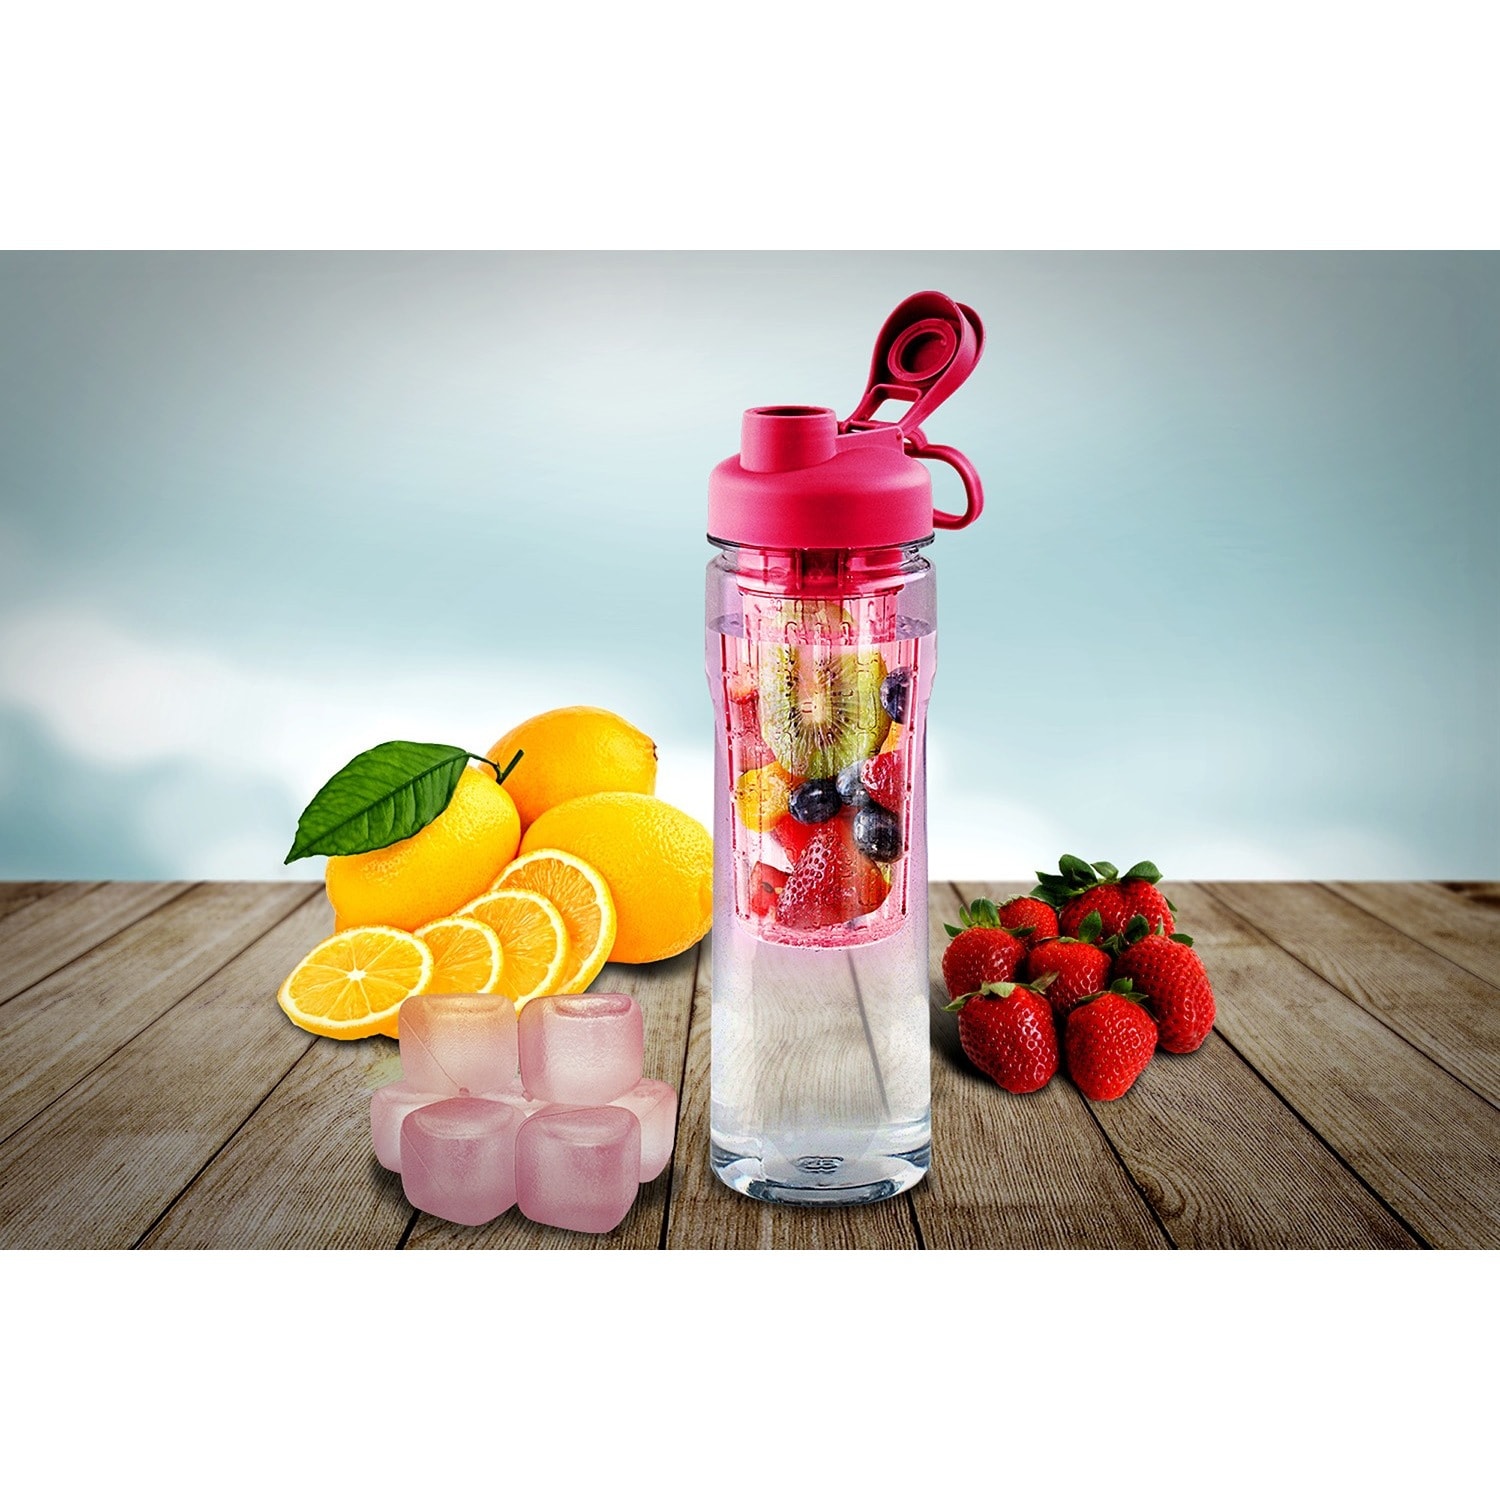 https://ak1.ostkcdn.com/images/products/11502051/Fruit-Infuser-Tritan-28-oz.-Water-Bottle-with-Reusable-Ice-Cubes-76b56125-8d0d-49fe-8304-4051fce9a4ca.jpg